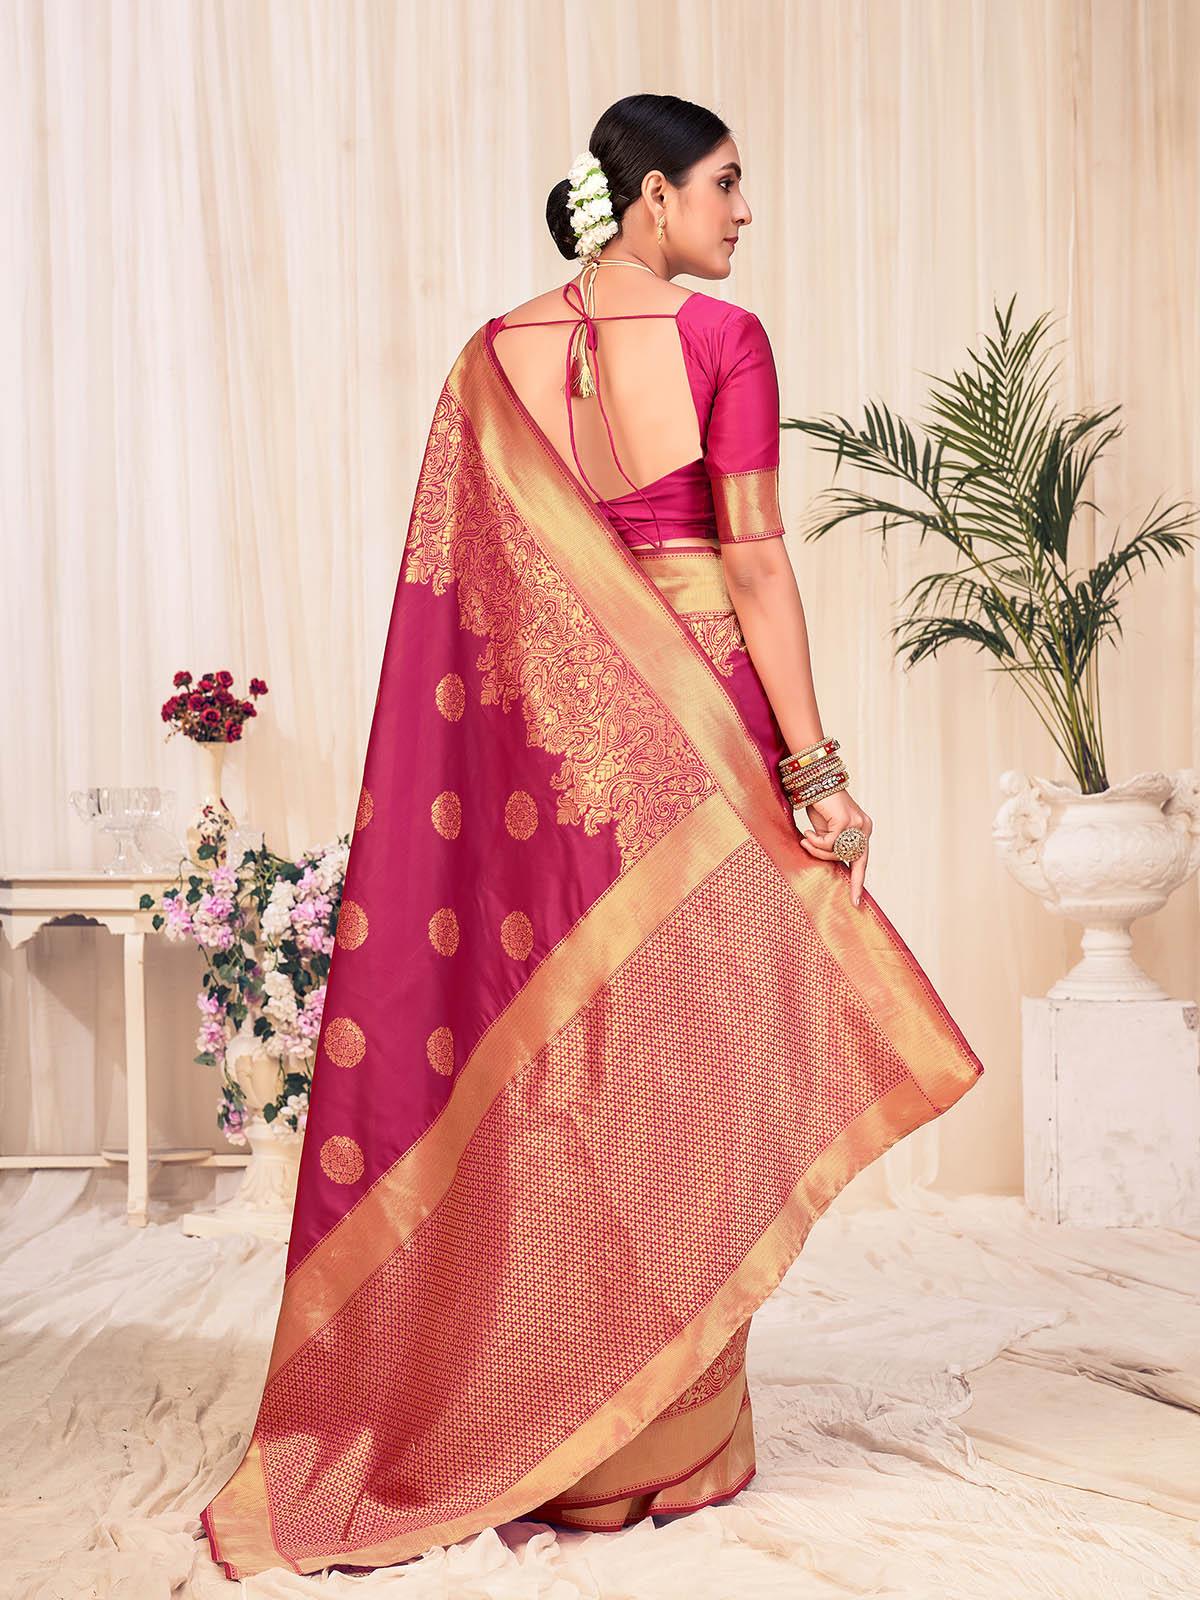 Women's Woven Red Colored Banarasi Silk Saree - Odette